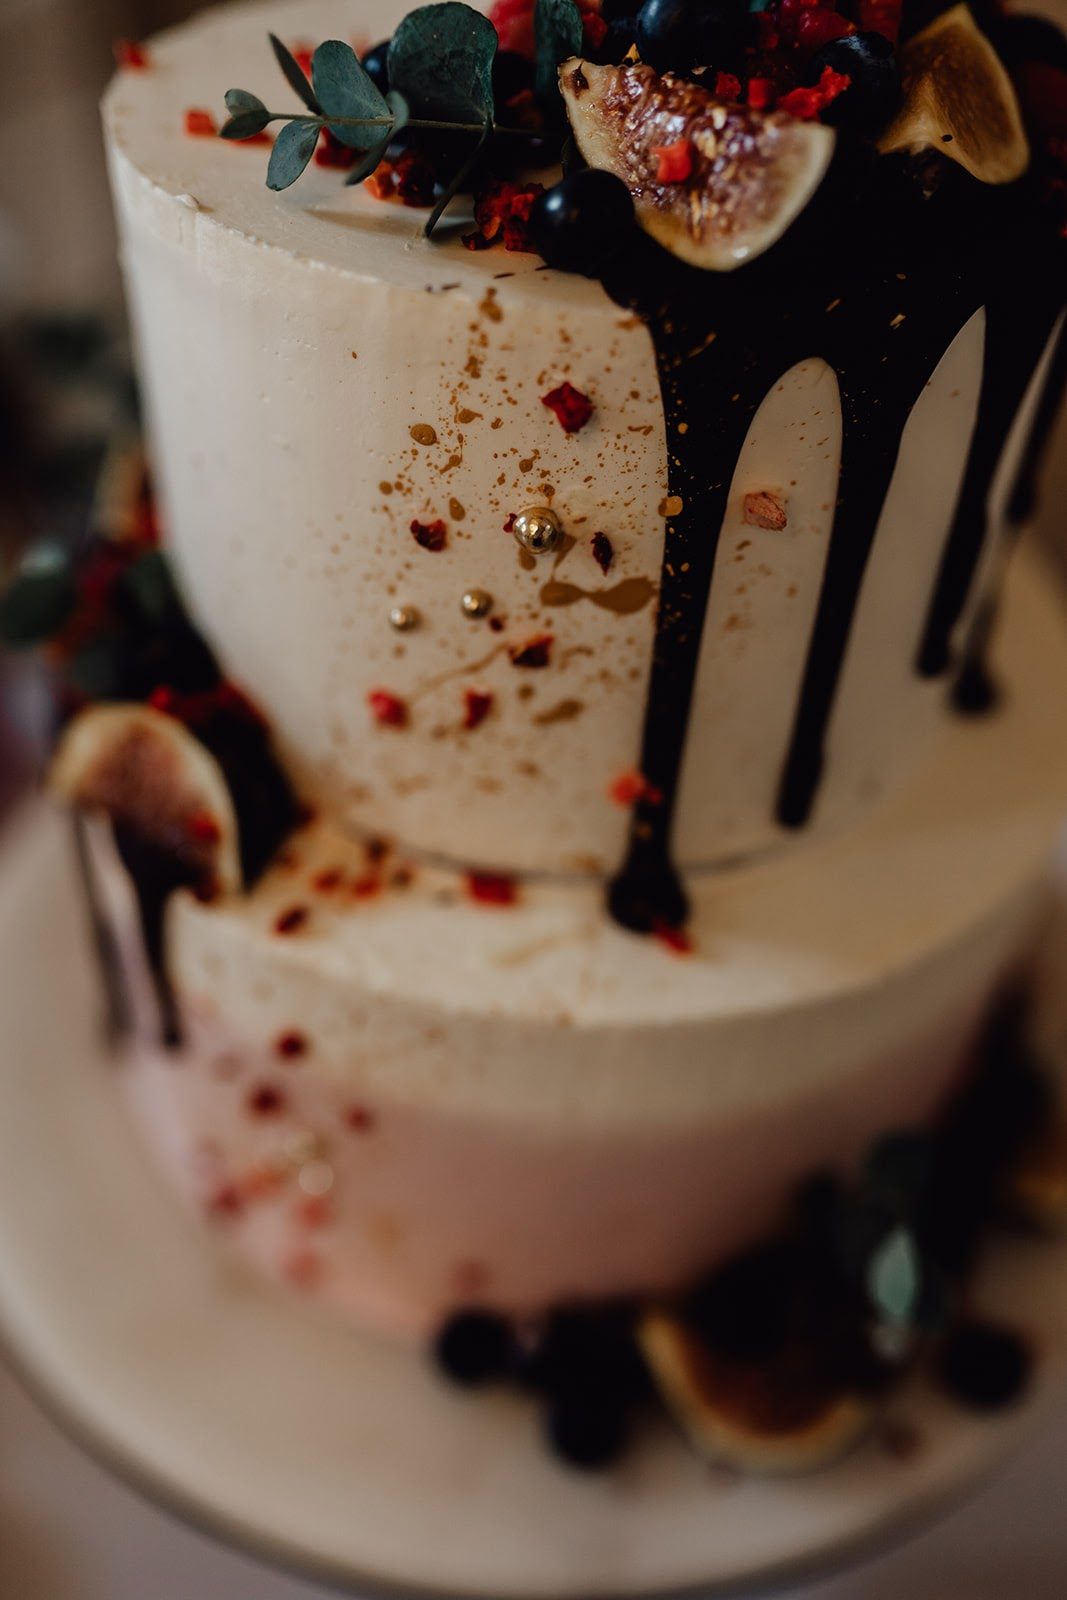 Sweettable, weddingcake, Hochzeitstorte, Dripcake, Macarons, Cupcakes, Donuts